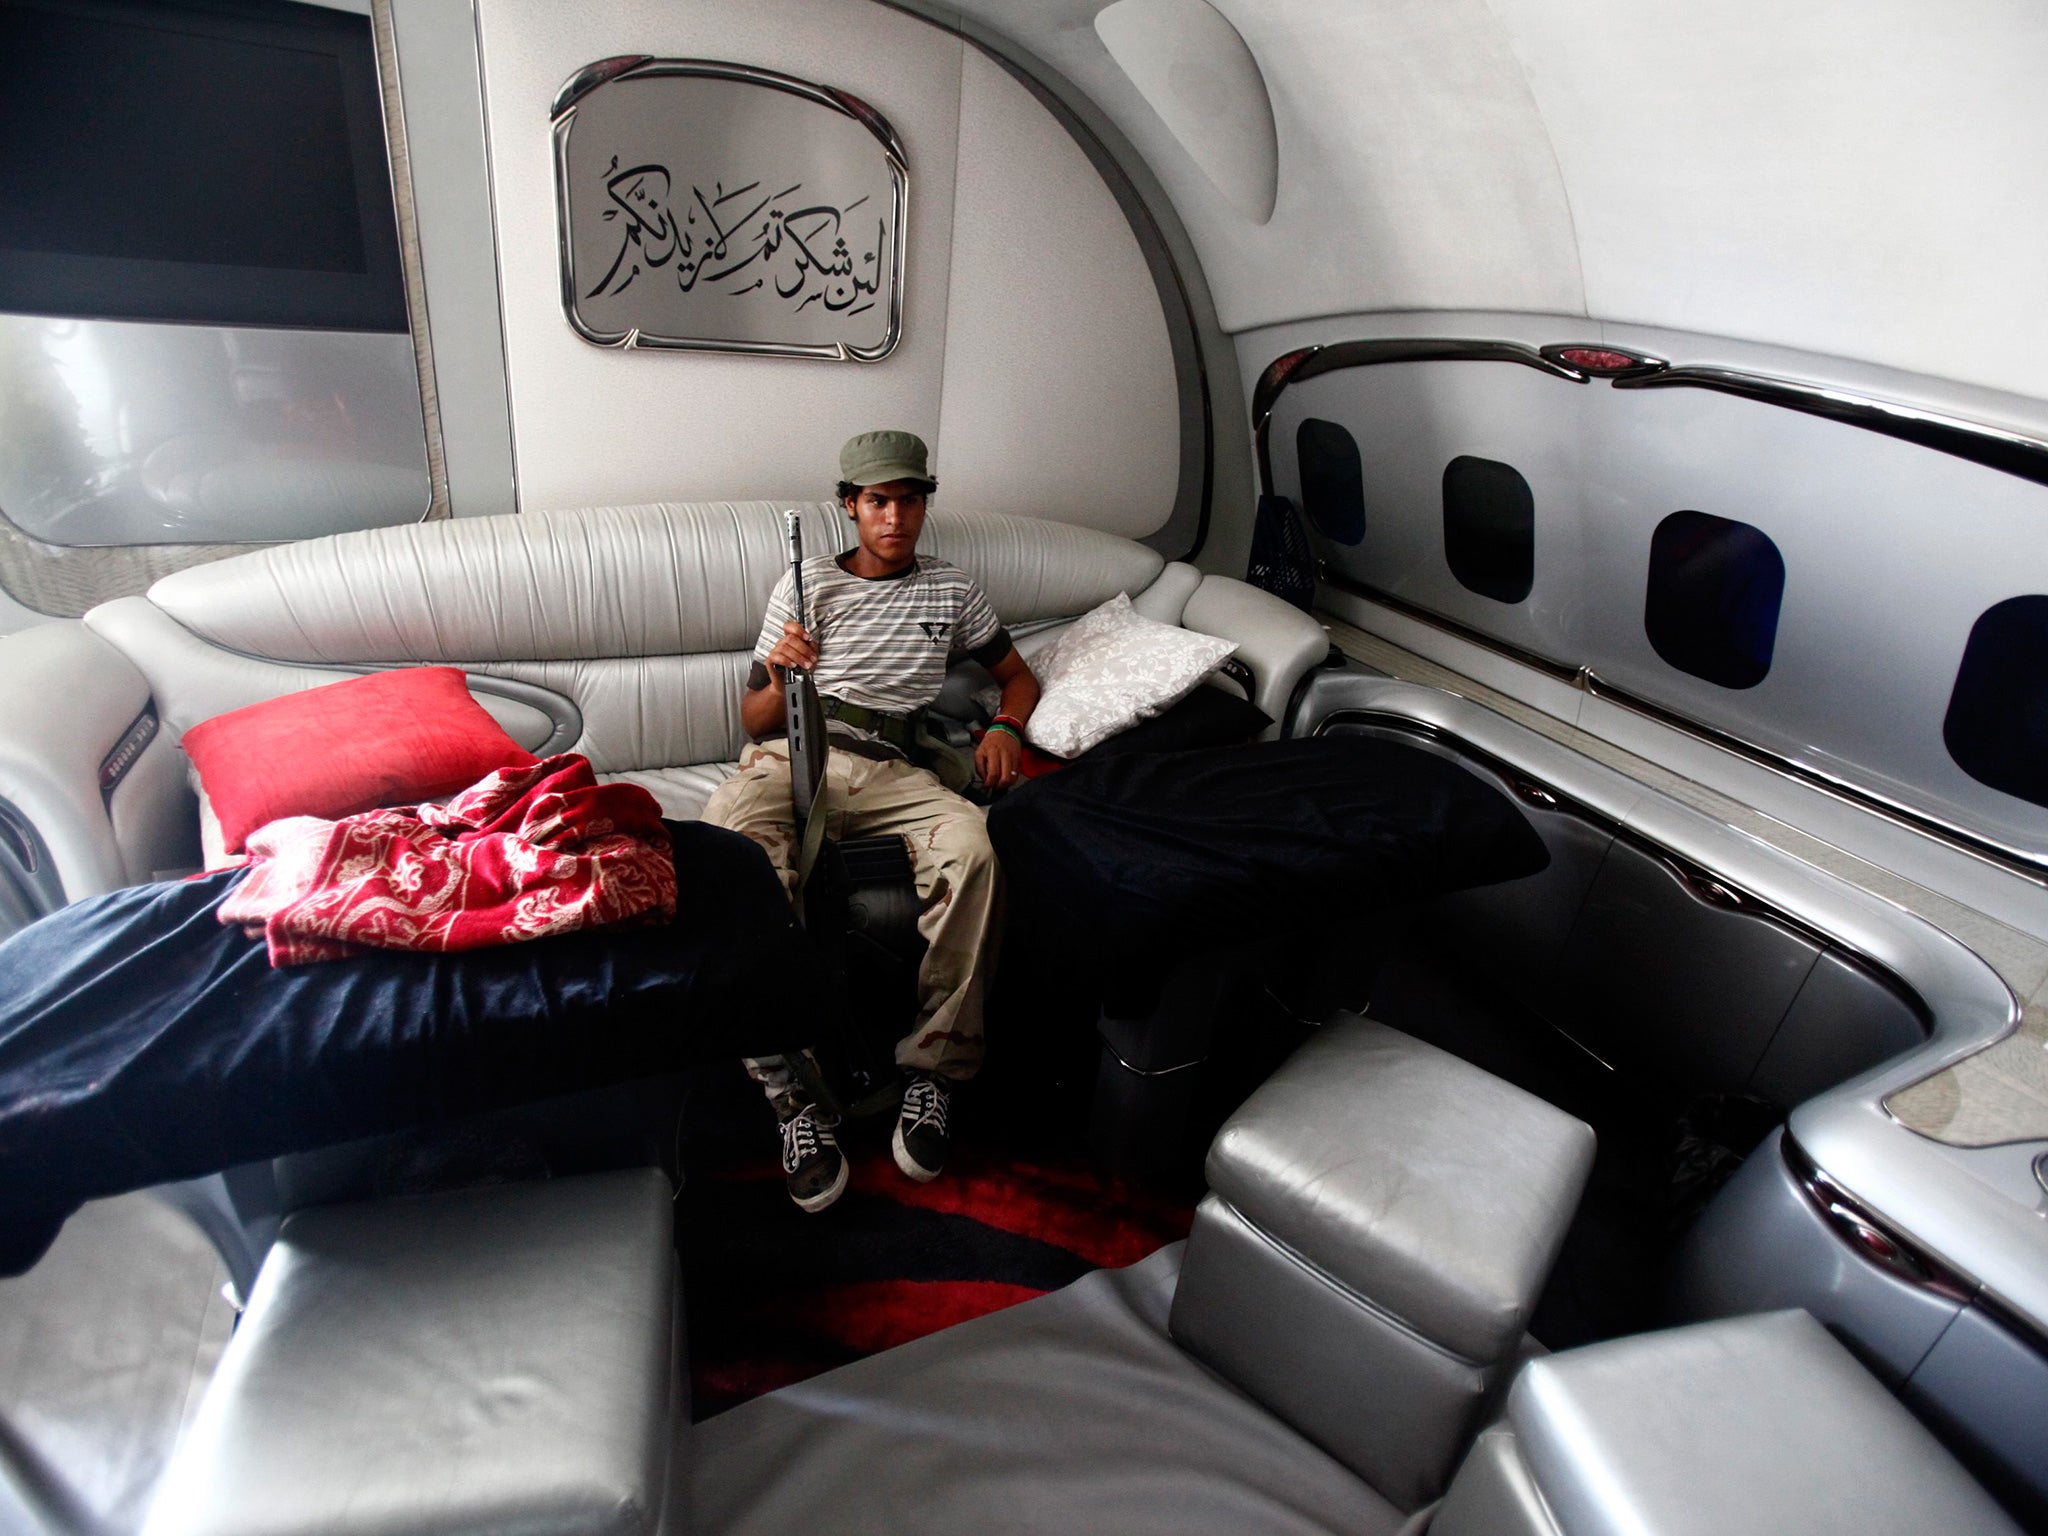 A Libyan rebel fighter relaxes inside the jet in Tripoli in 2011